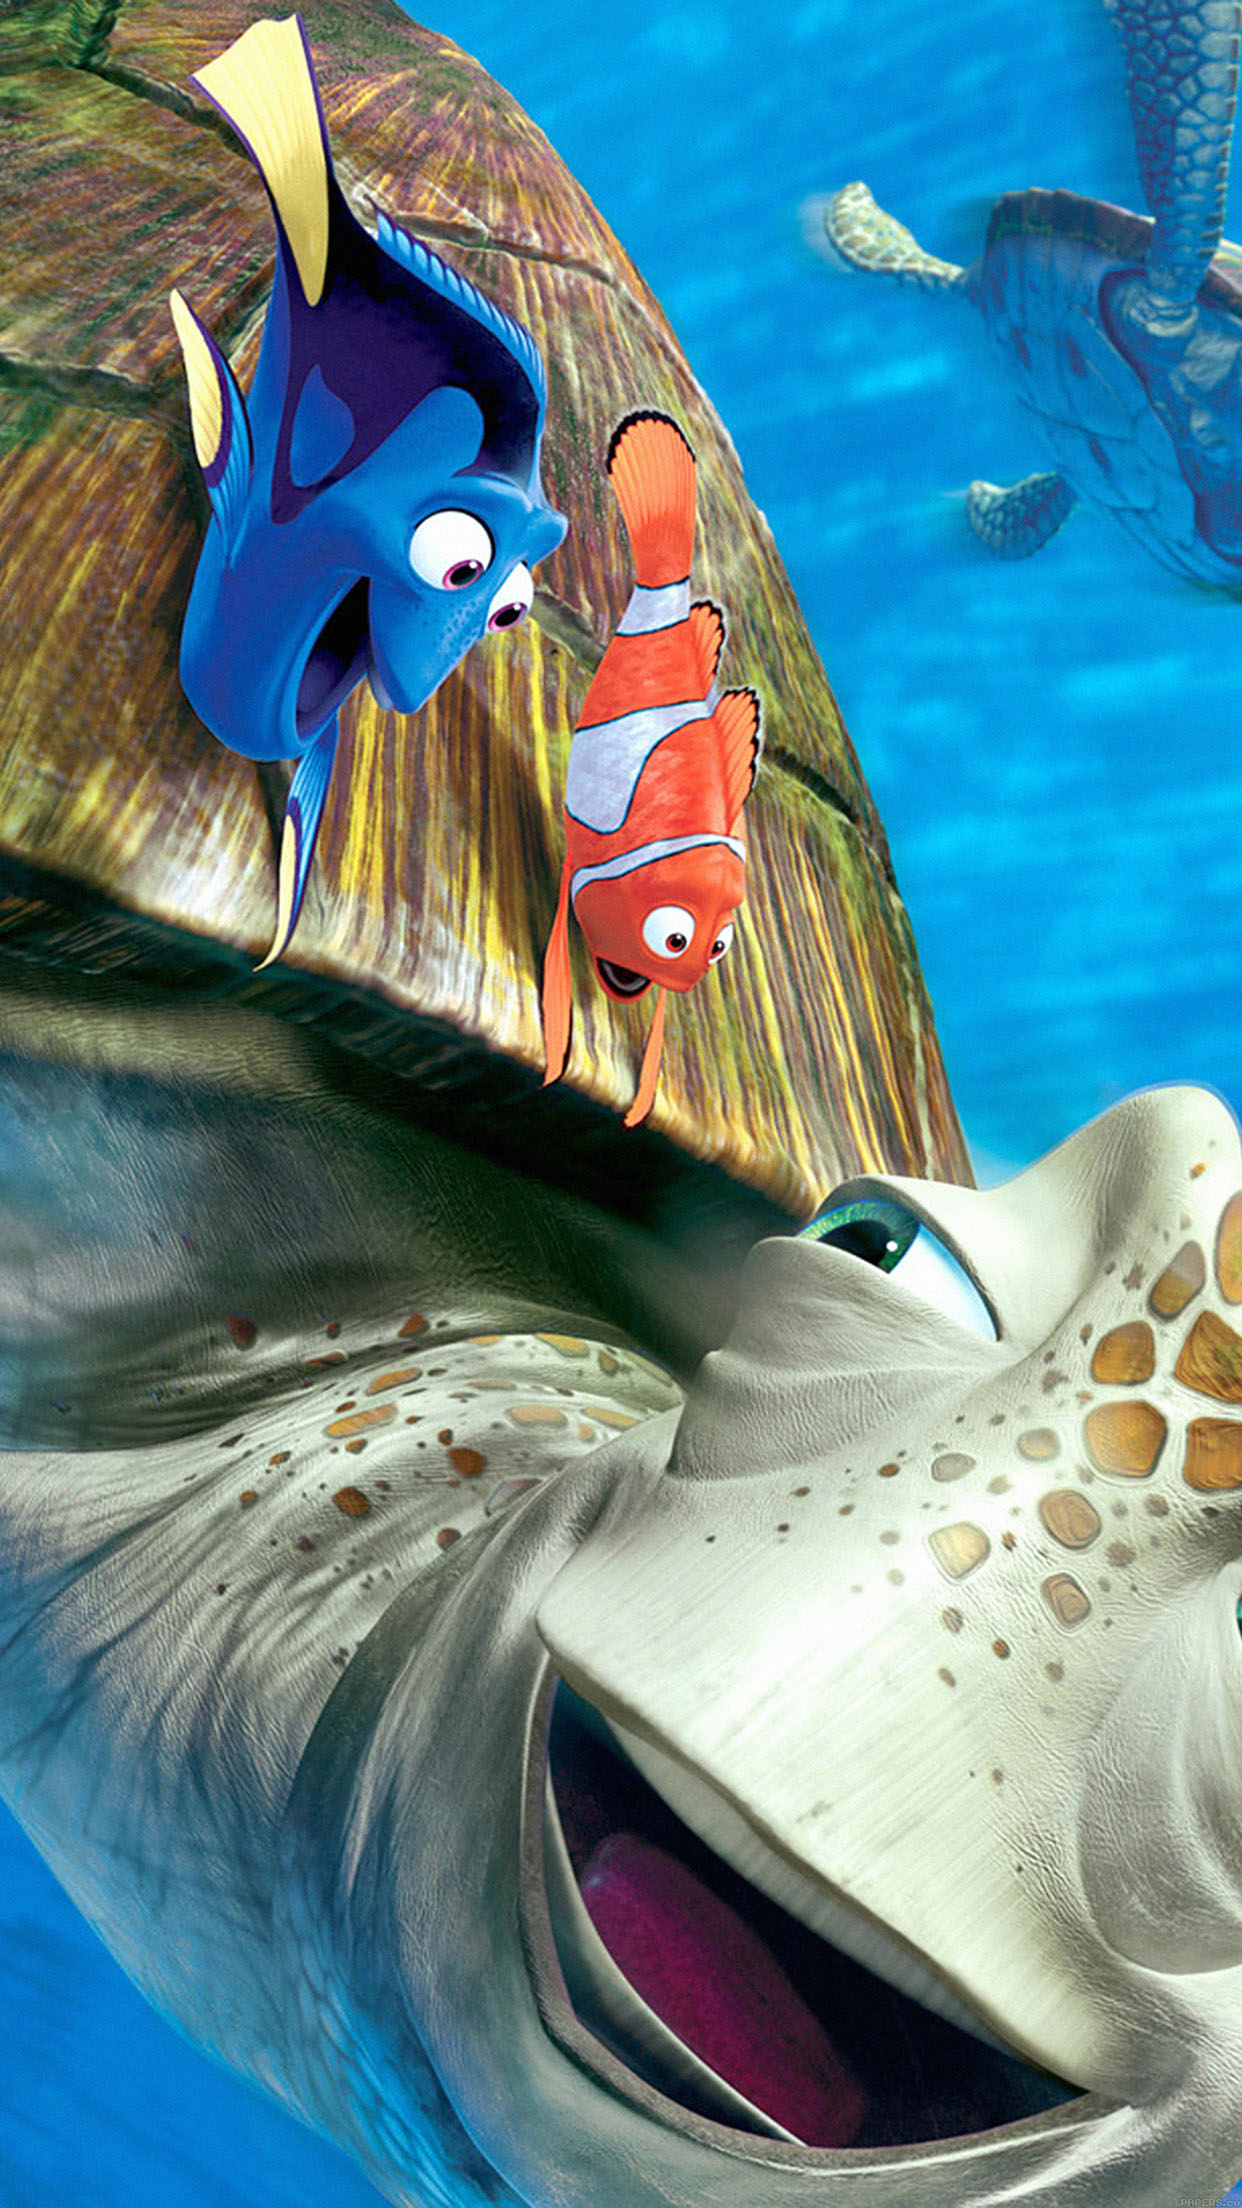 disney pixar wallpaper,illustration,delfin,cg kunstwerk,erfundener charakter